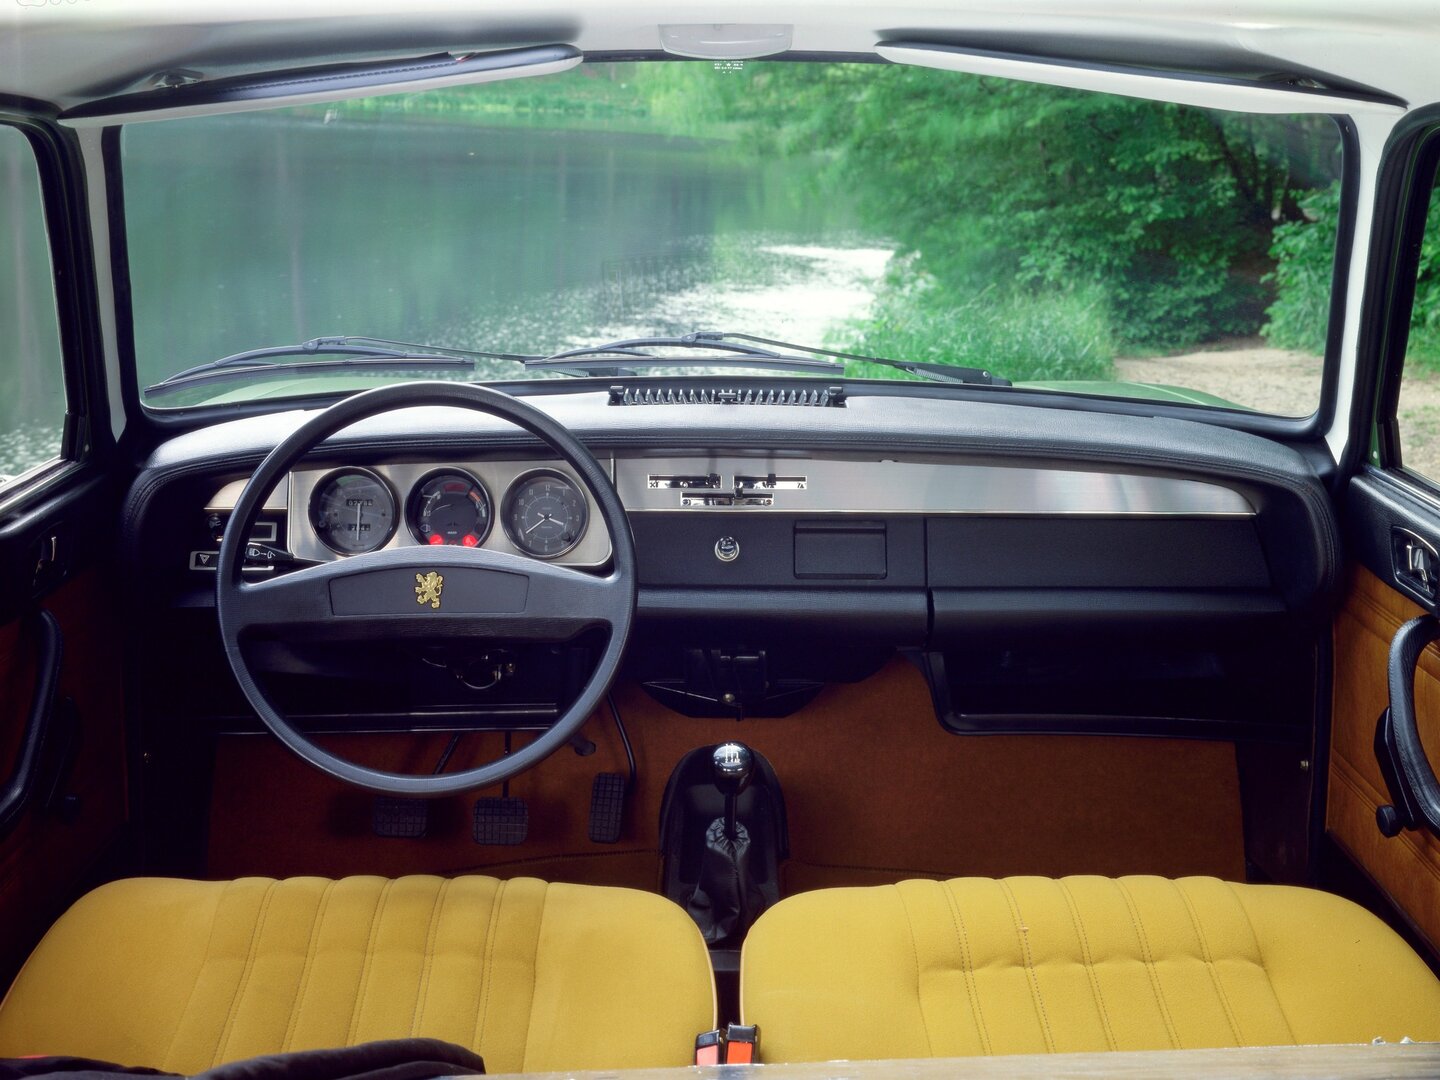 Peugeot 304 Coupe interior